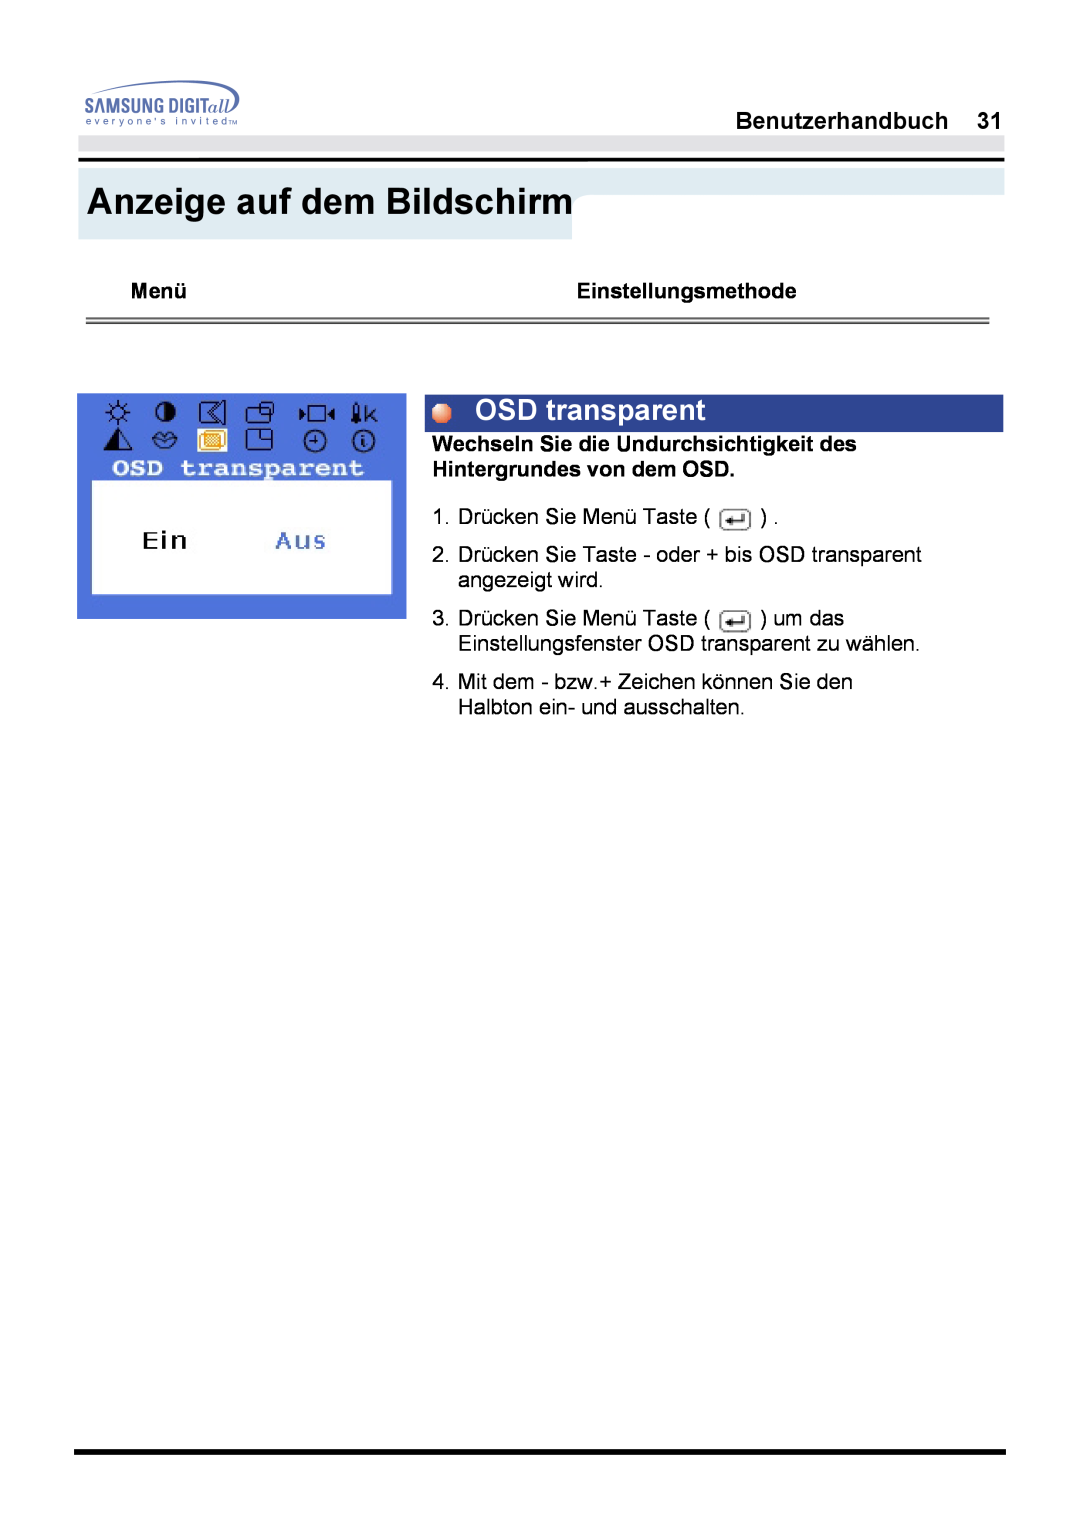 Samsung GH17ESSNZ/EDC, GH17HSSN/EDC, GH17LSASJ/EDC, GH17LSSS OSD transparent, Anzeige auf dem Bildschirm, Benutzerhandbuch 